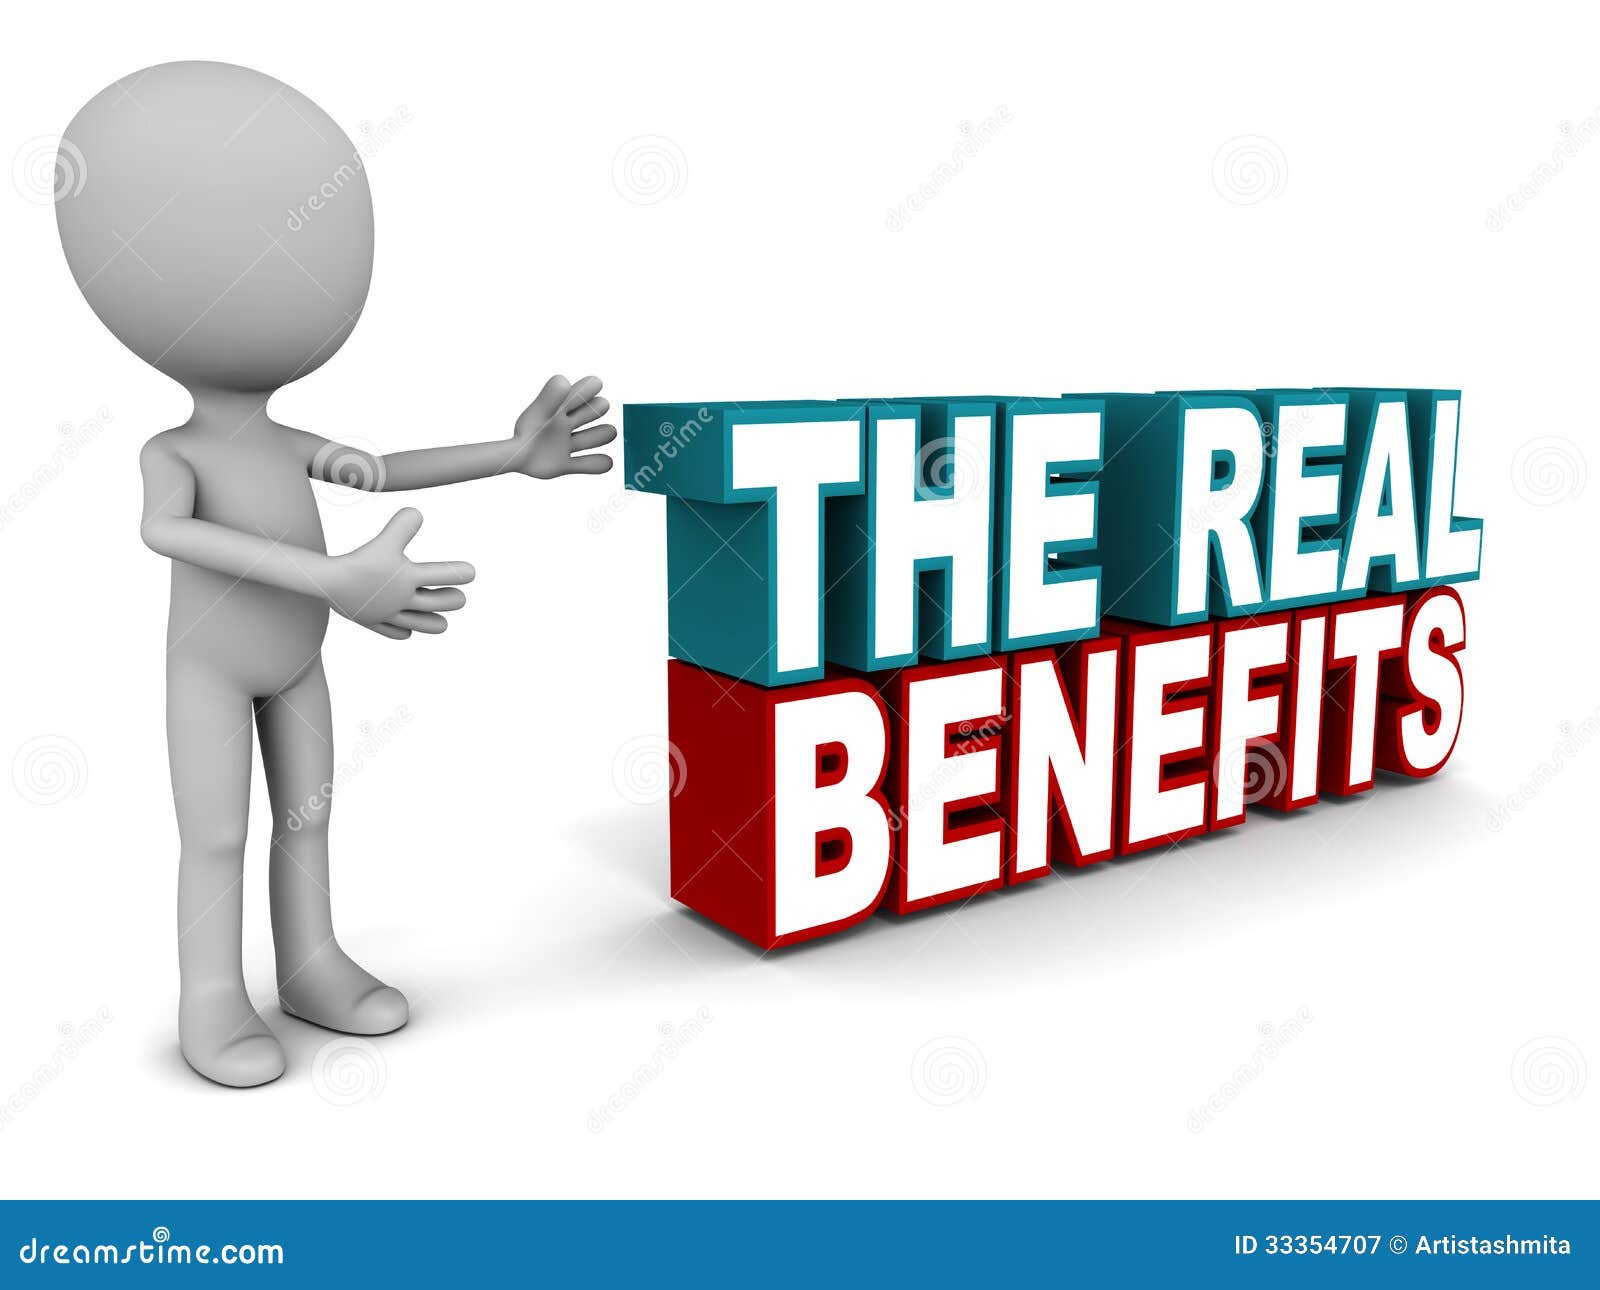 clipart employee benefits - photo #49